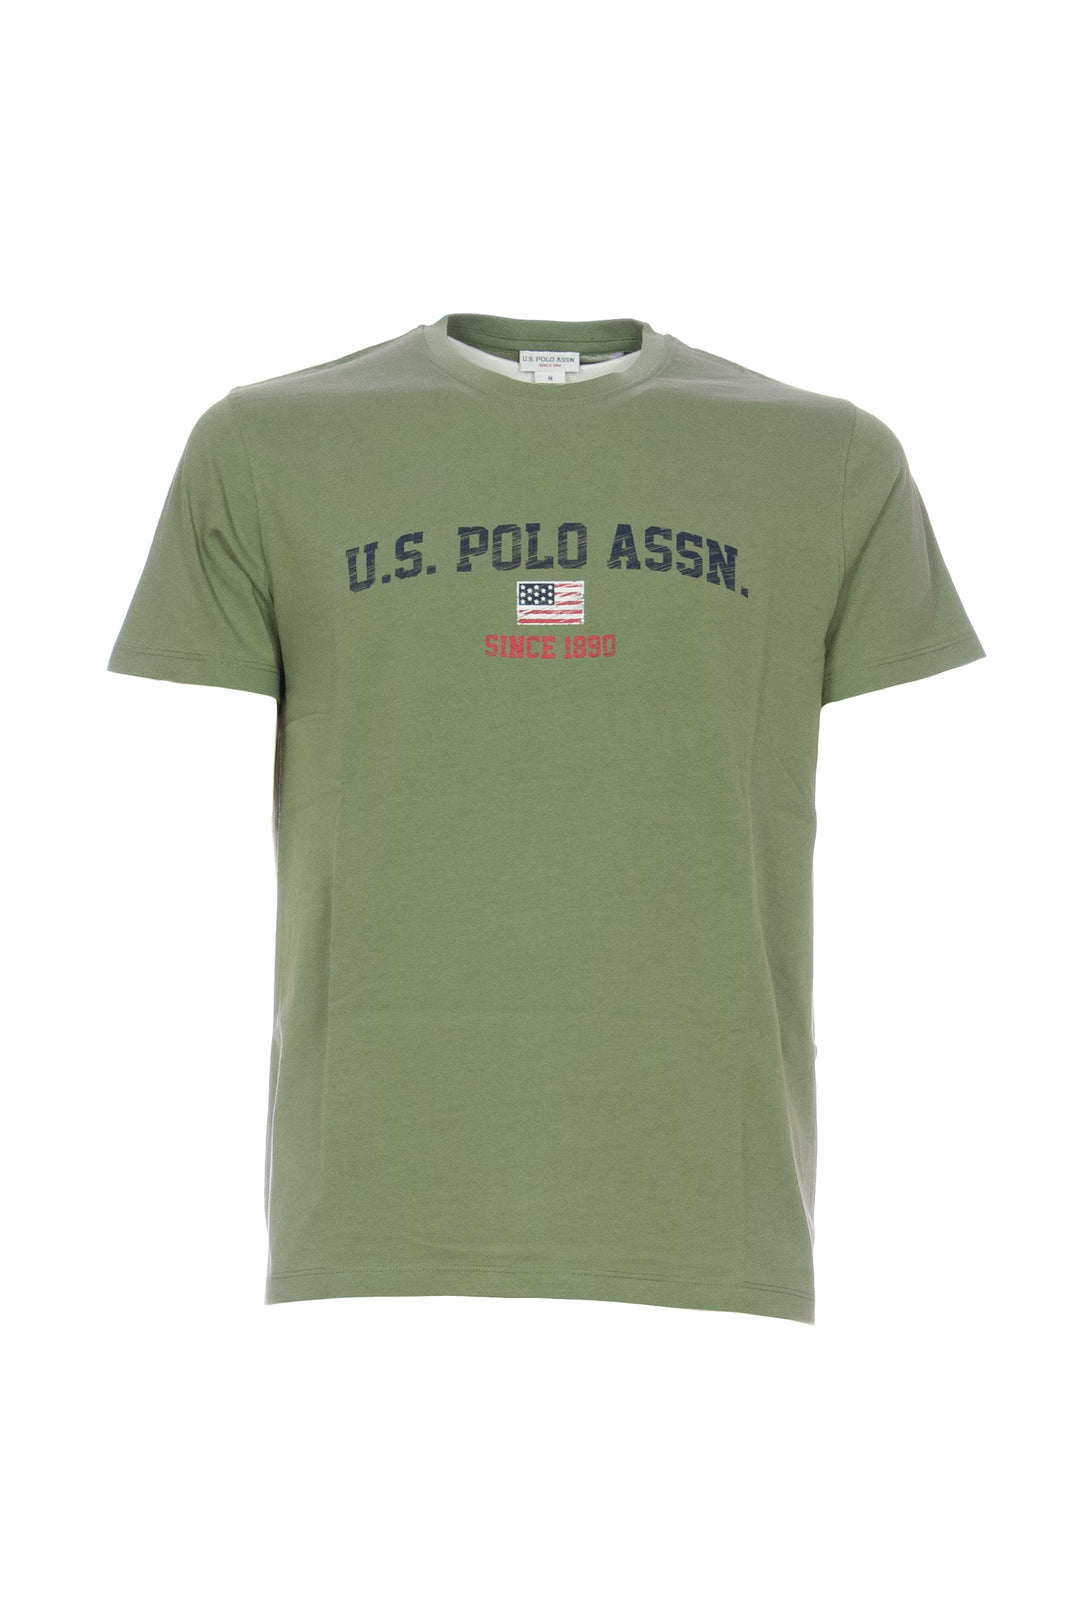 U.S. POLO ASSN. T-shirt verde militare in cotone con stampa U.S. Polo Assn. - Mancinelli 1954